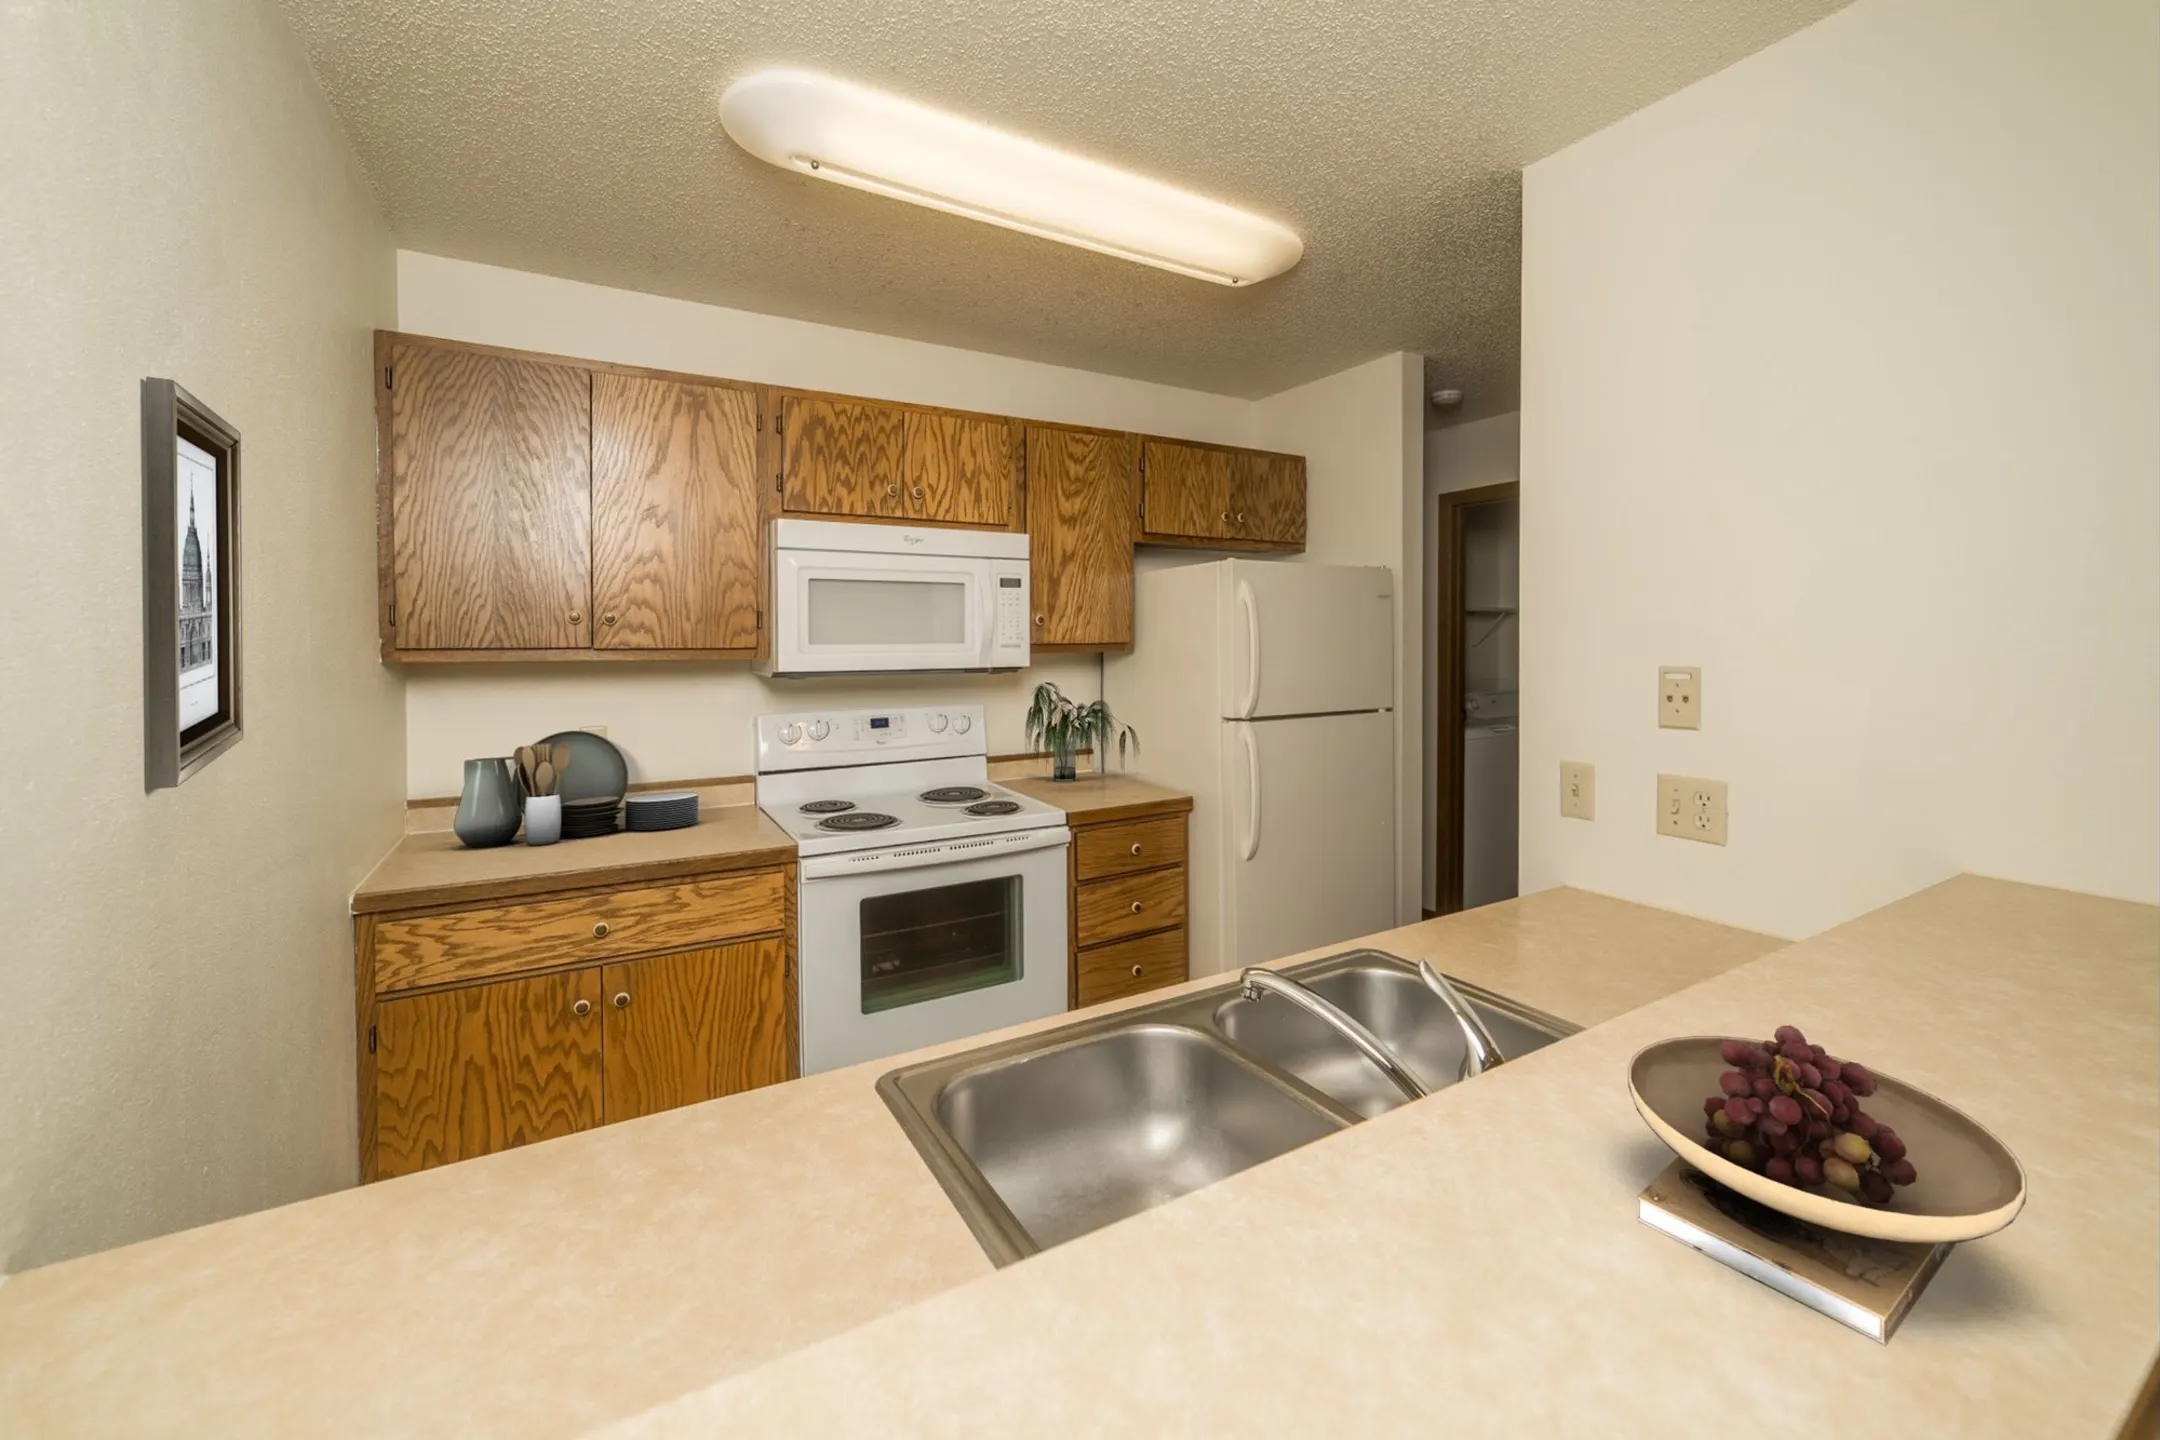 Kitchen - Terrace Hills Apartments - Sioux Falls, SD